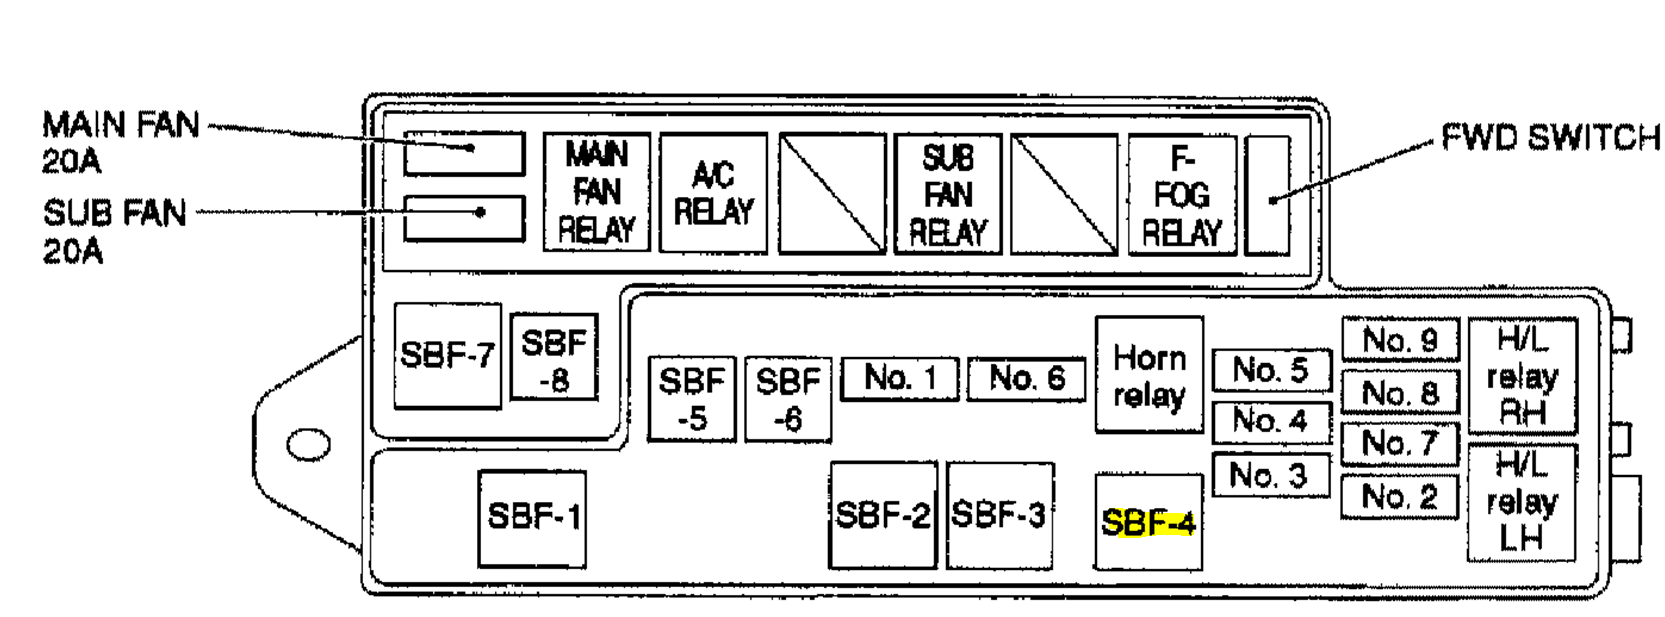 93 Subaru Legacy Wiring Diagram - Wiring Diagram Networks